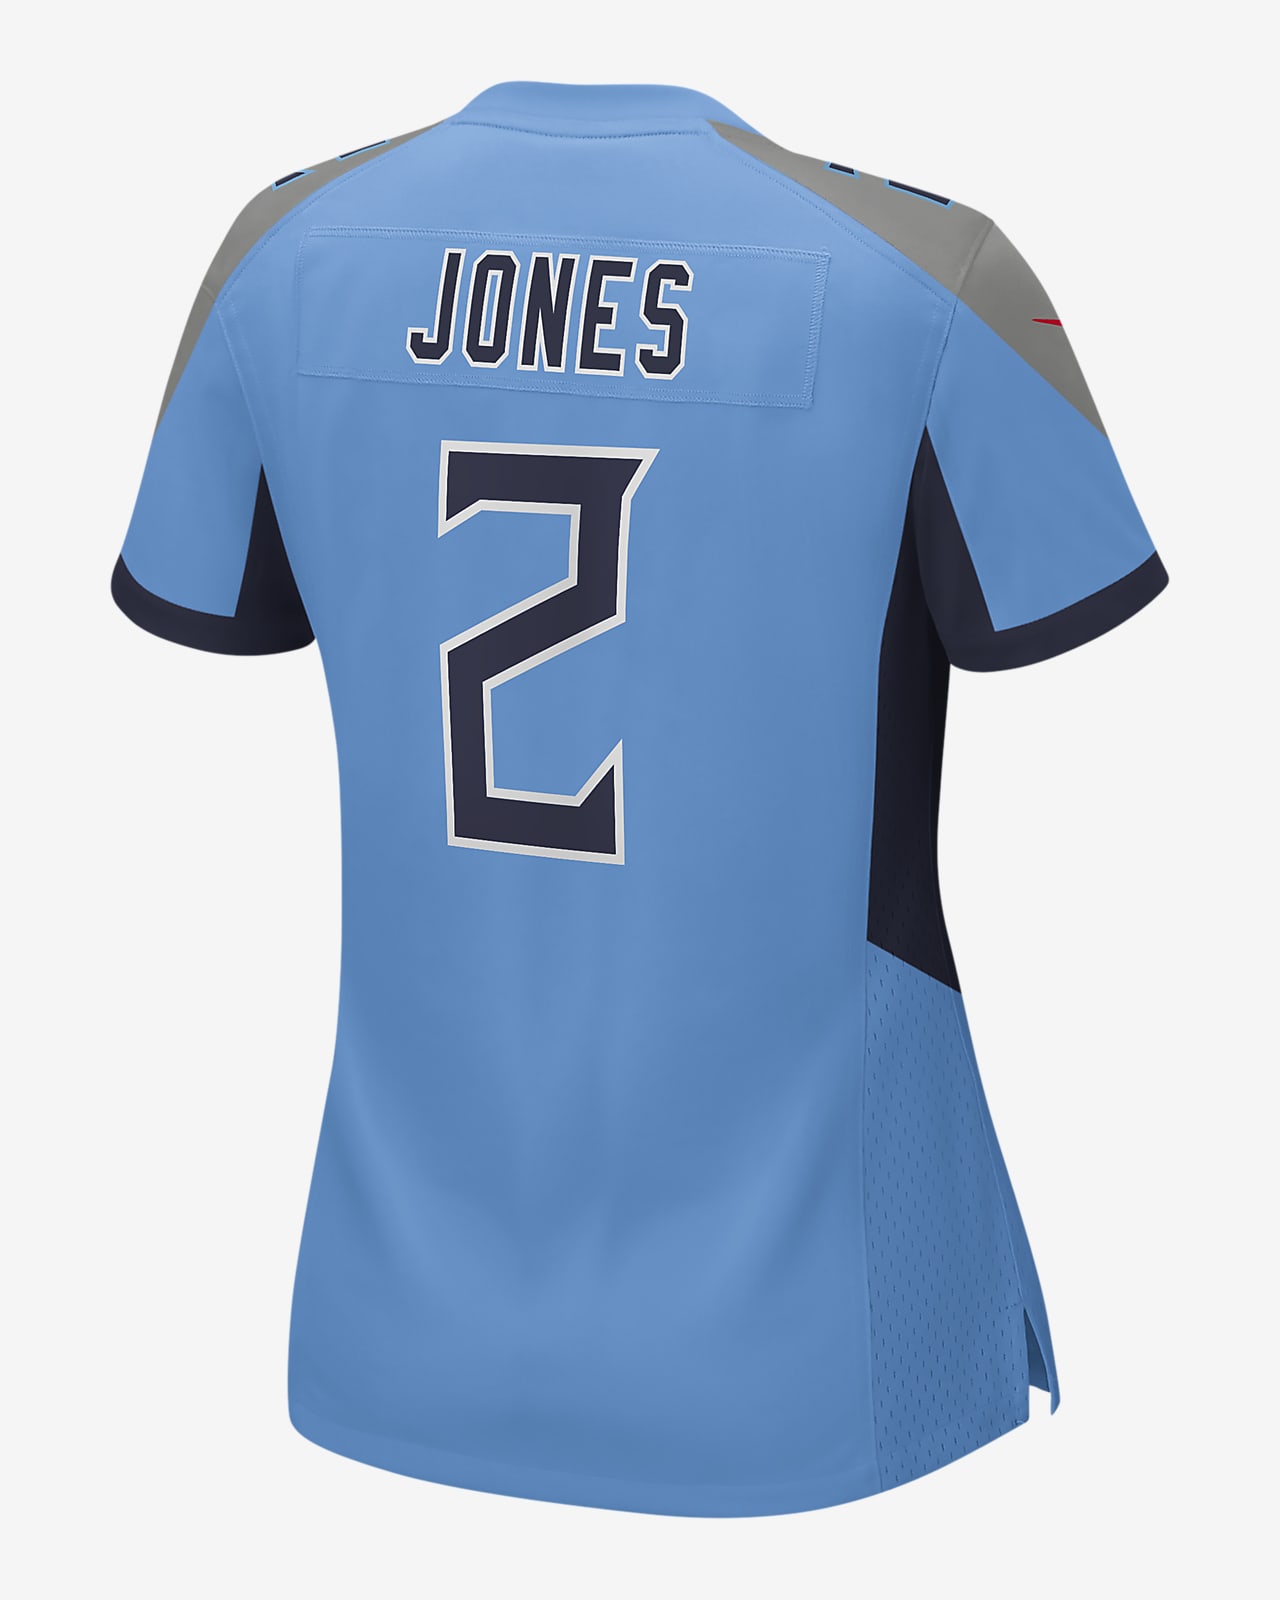 NFL Tennessee Titans (Julio Jones) Women's Game Football Jersey.